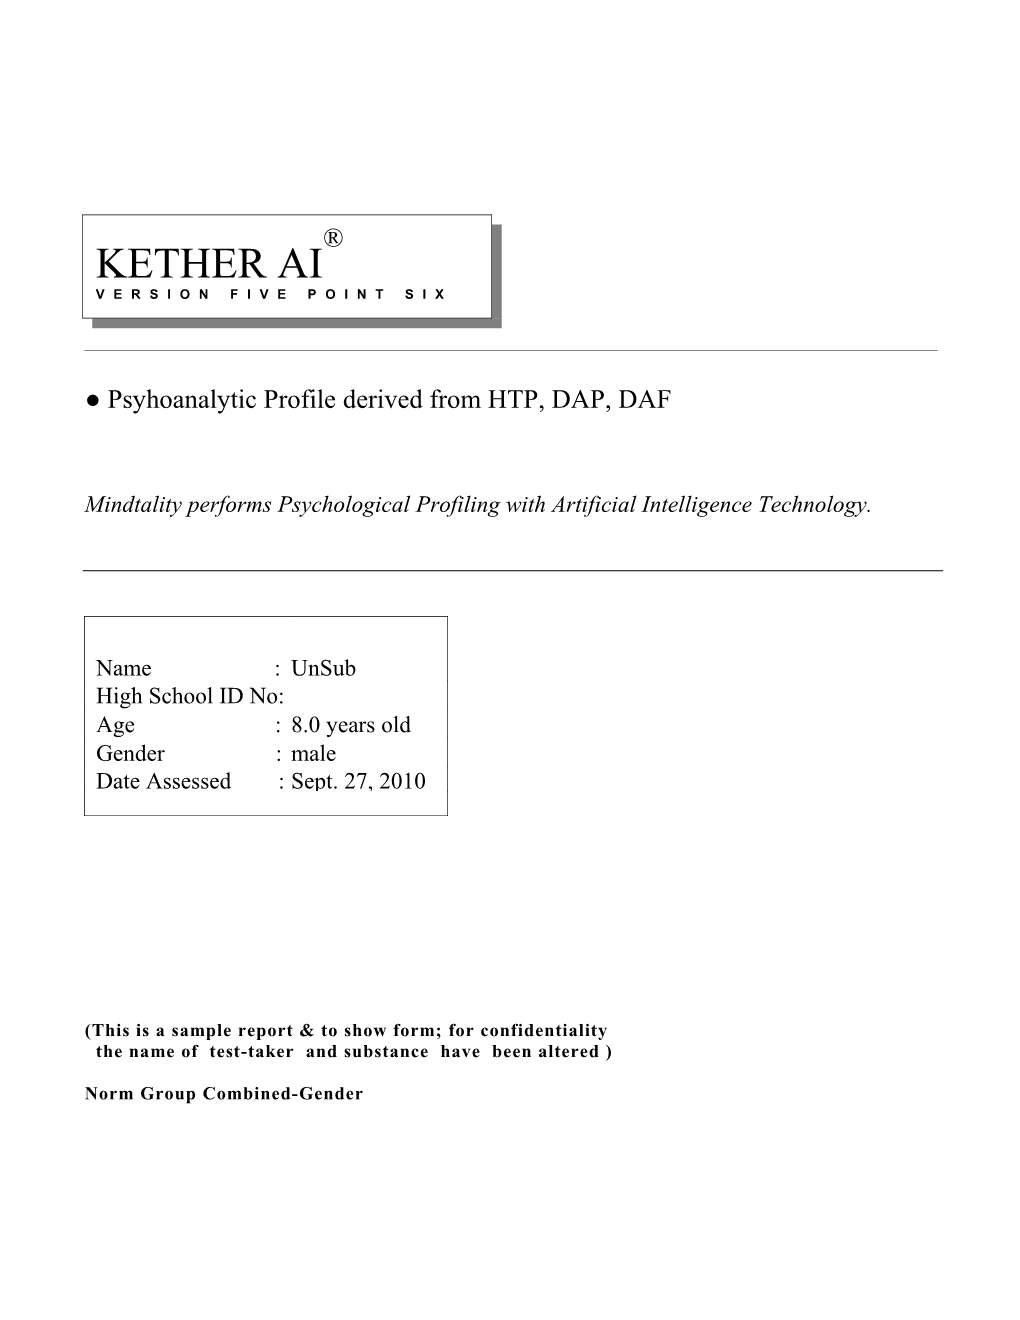 Psyhoanalytic Profile Derived from HTP, DAP, DAF